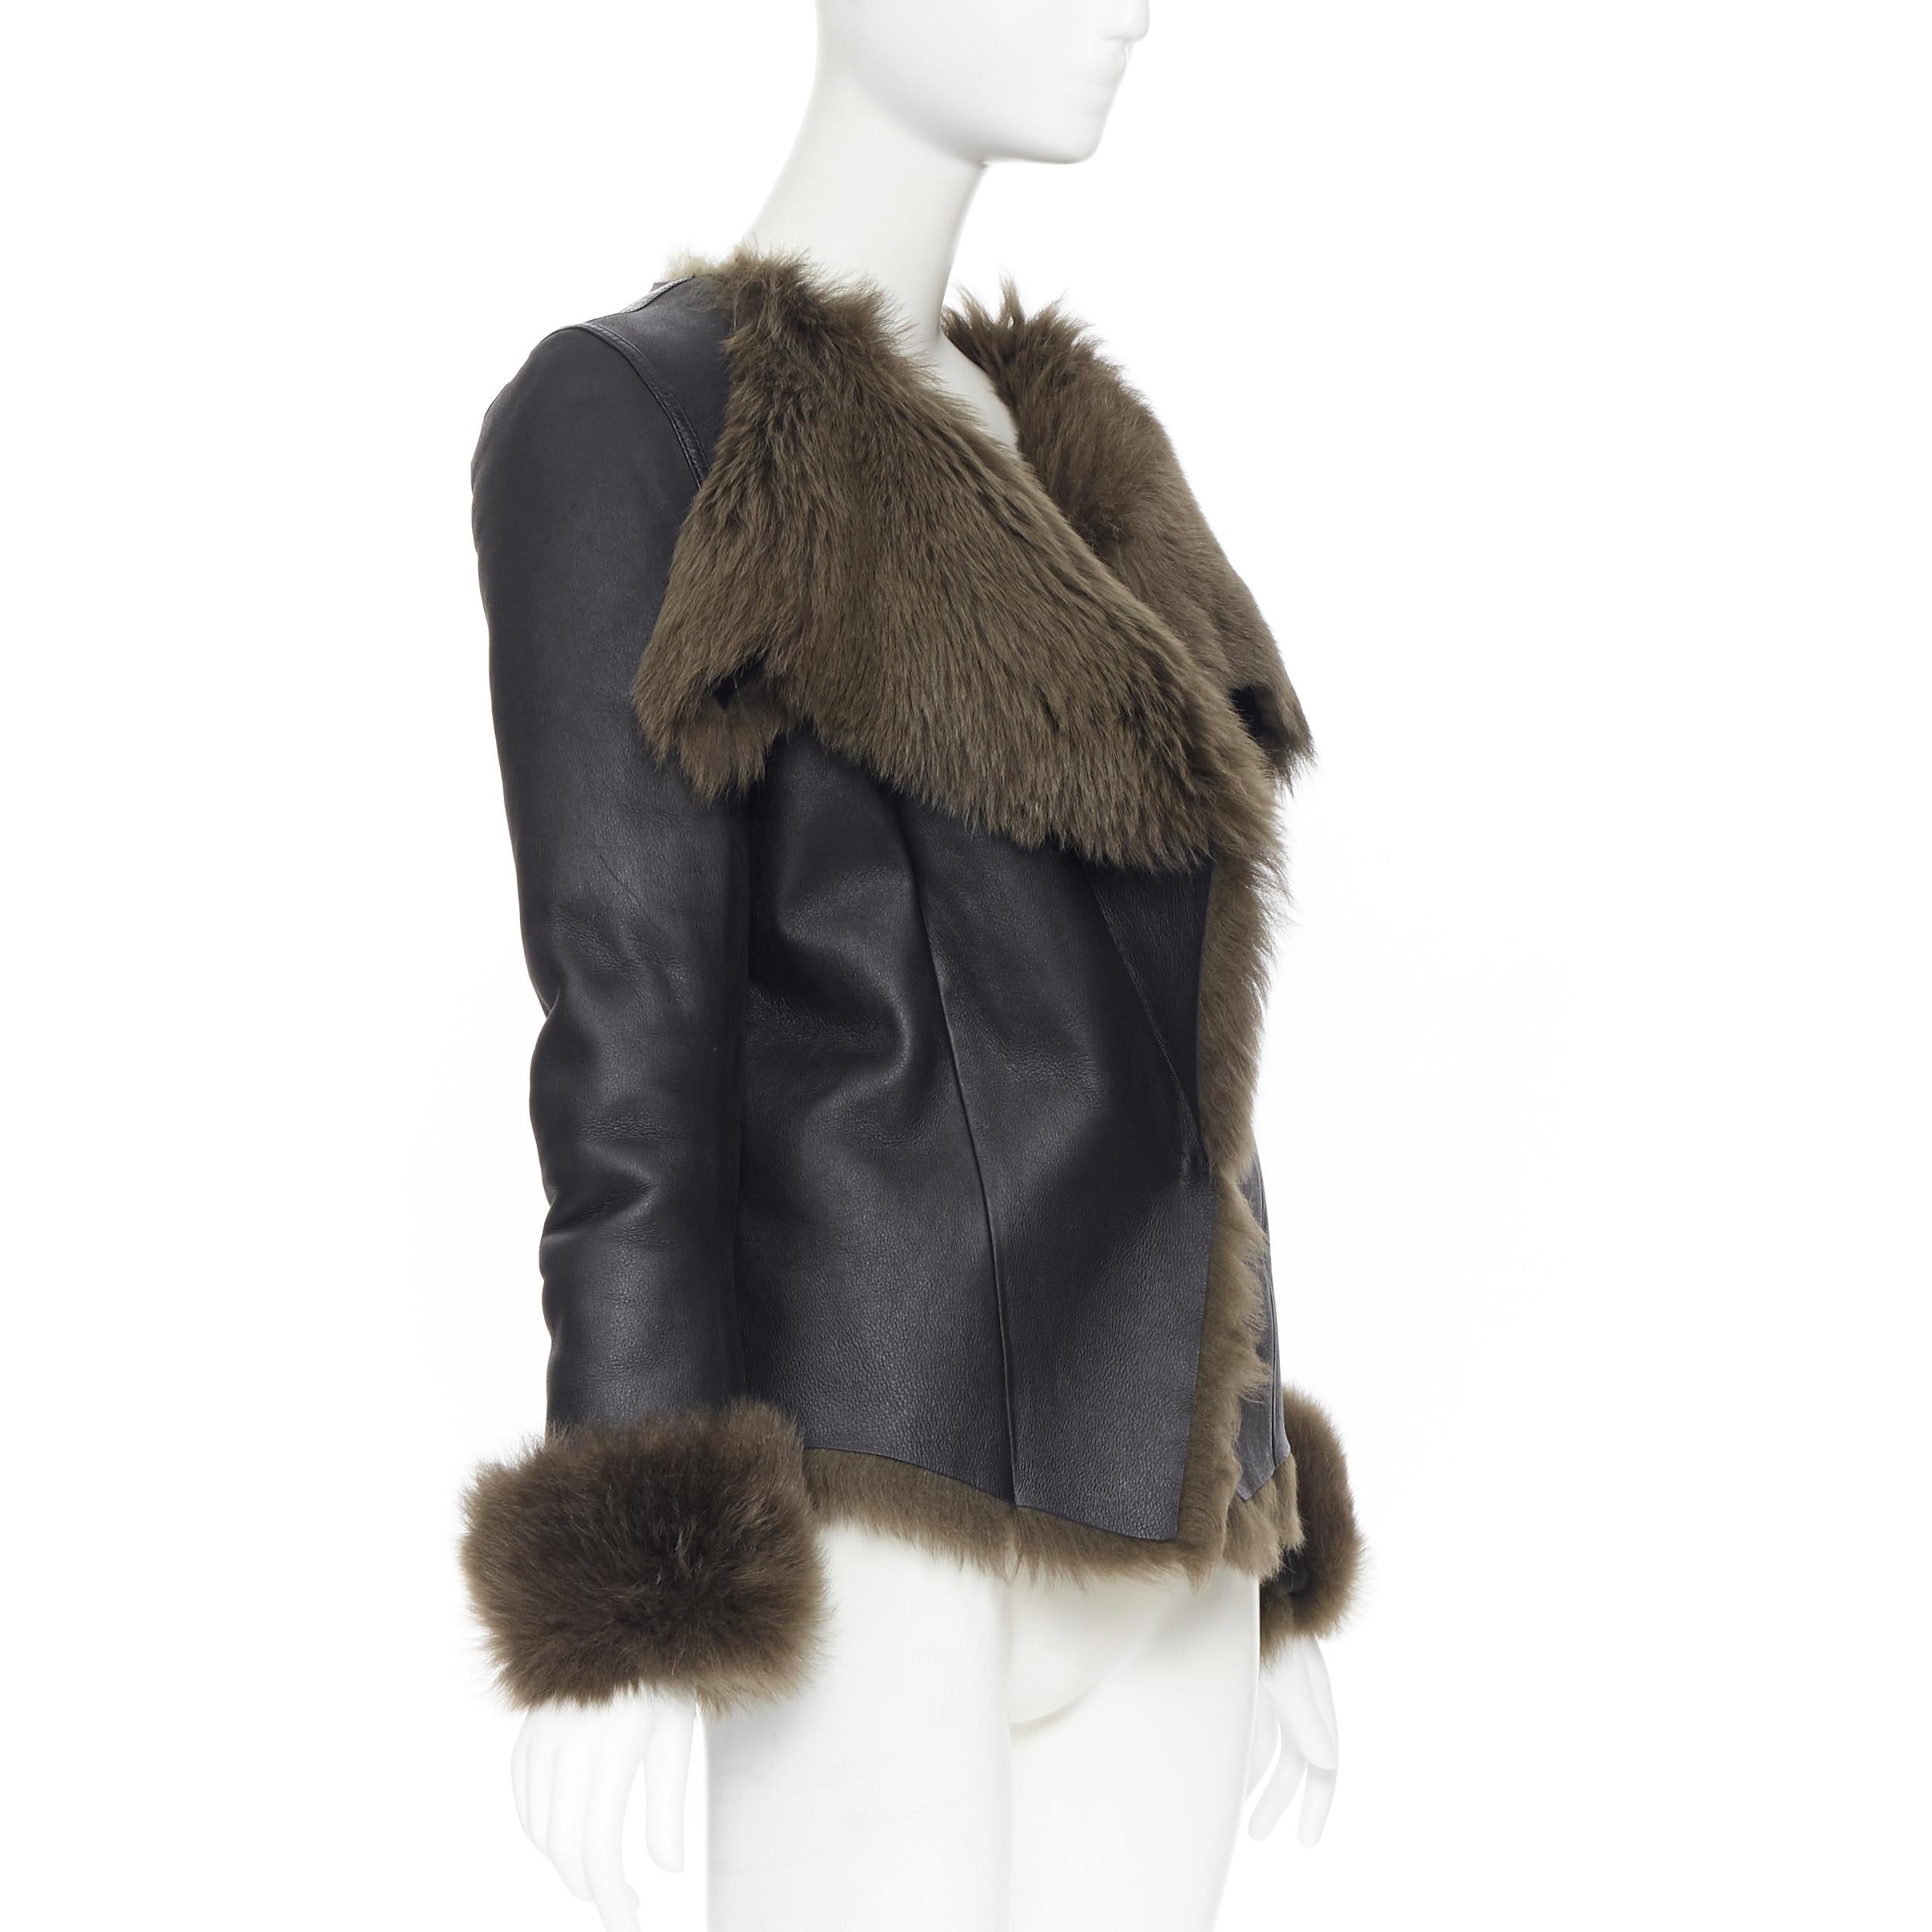 balenciaga leather jacket with fur collar